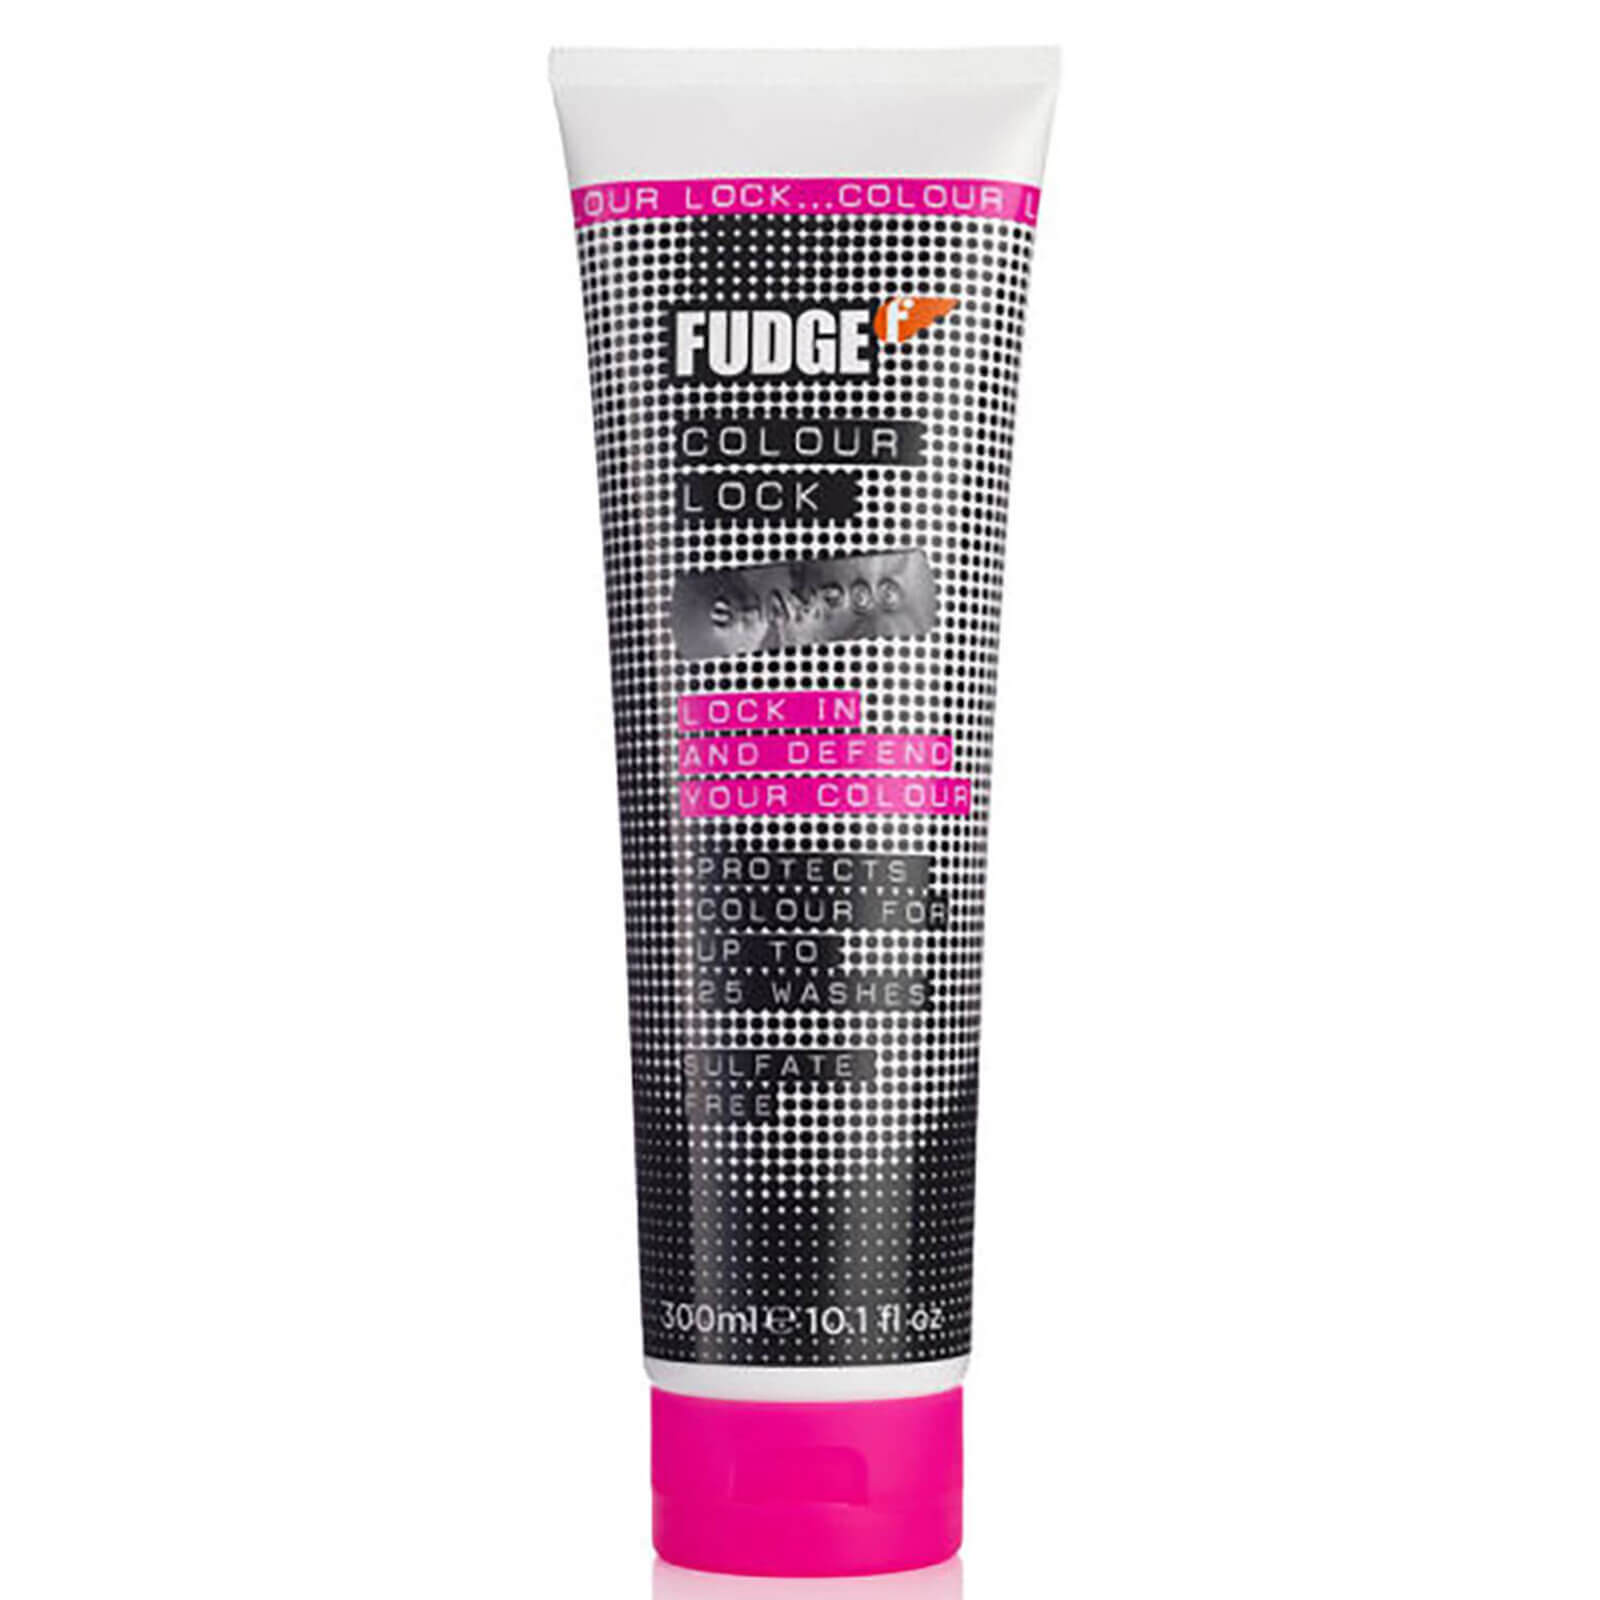 Fudge Colour Lock Shampoo (300 ml)